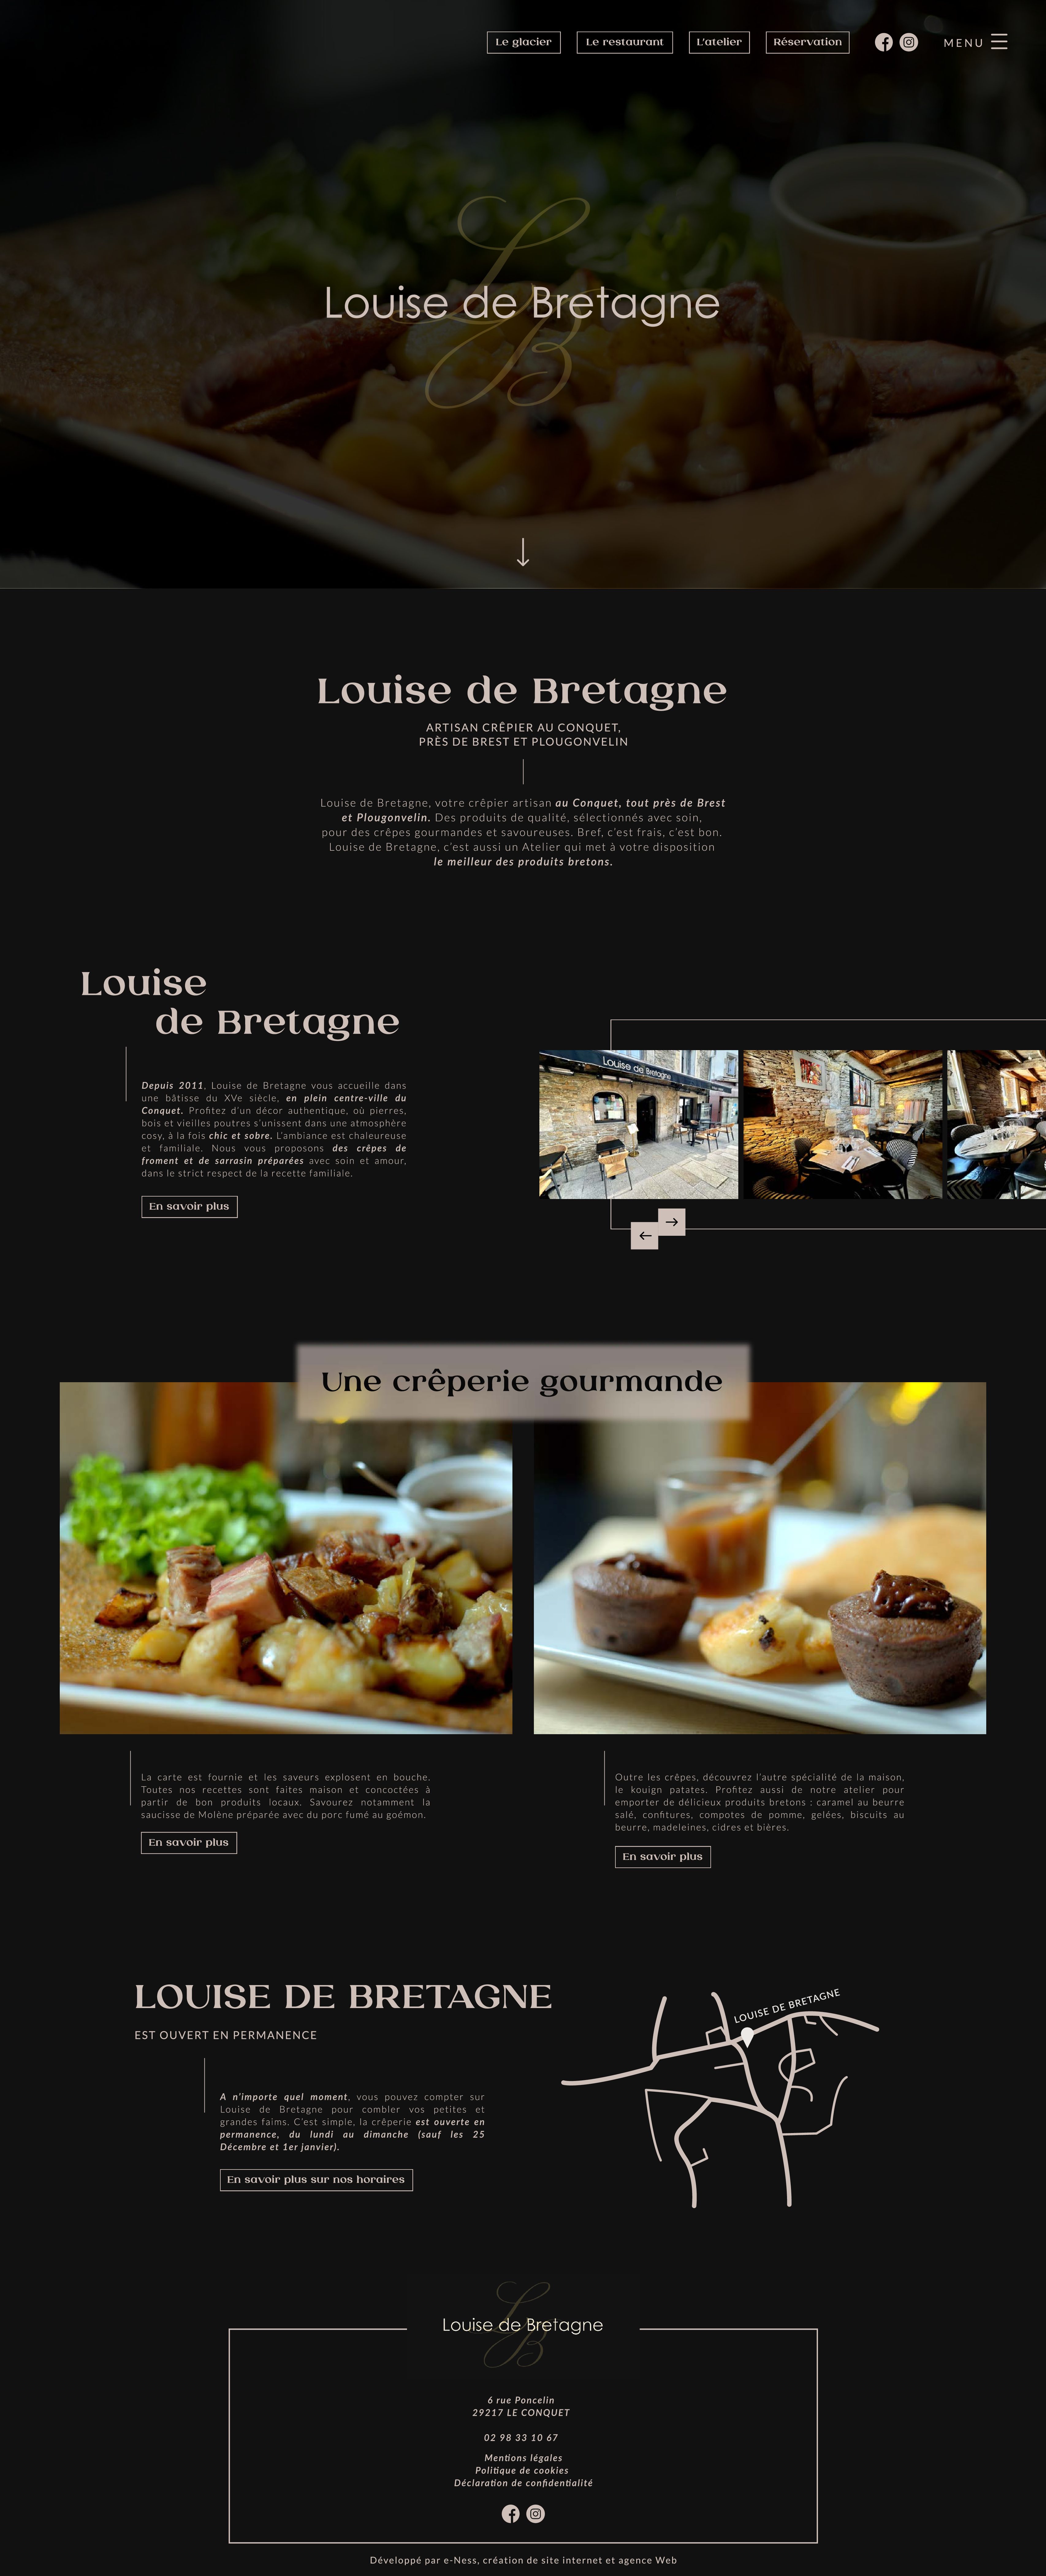 louisedebretagne.bzh v5 pdf - Quimper Brest